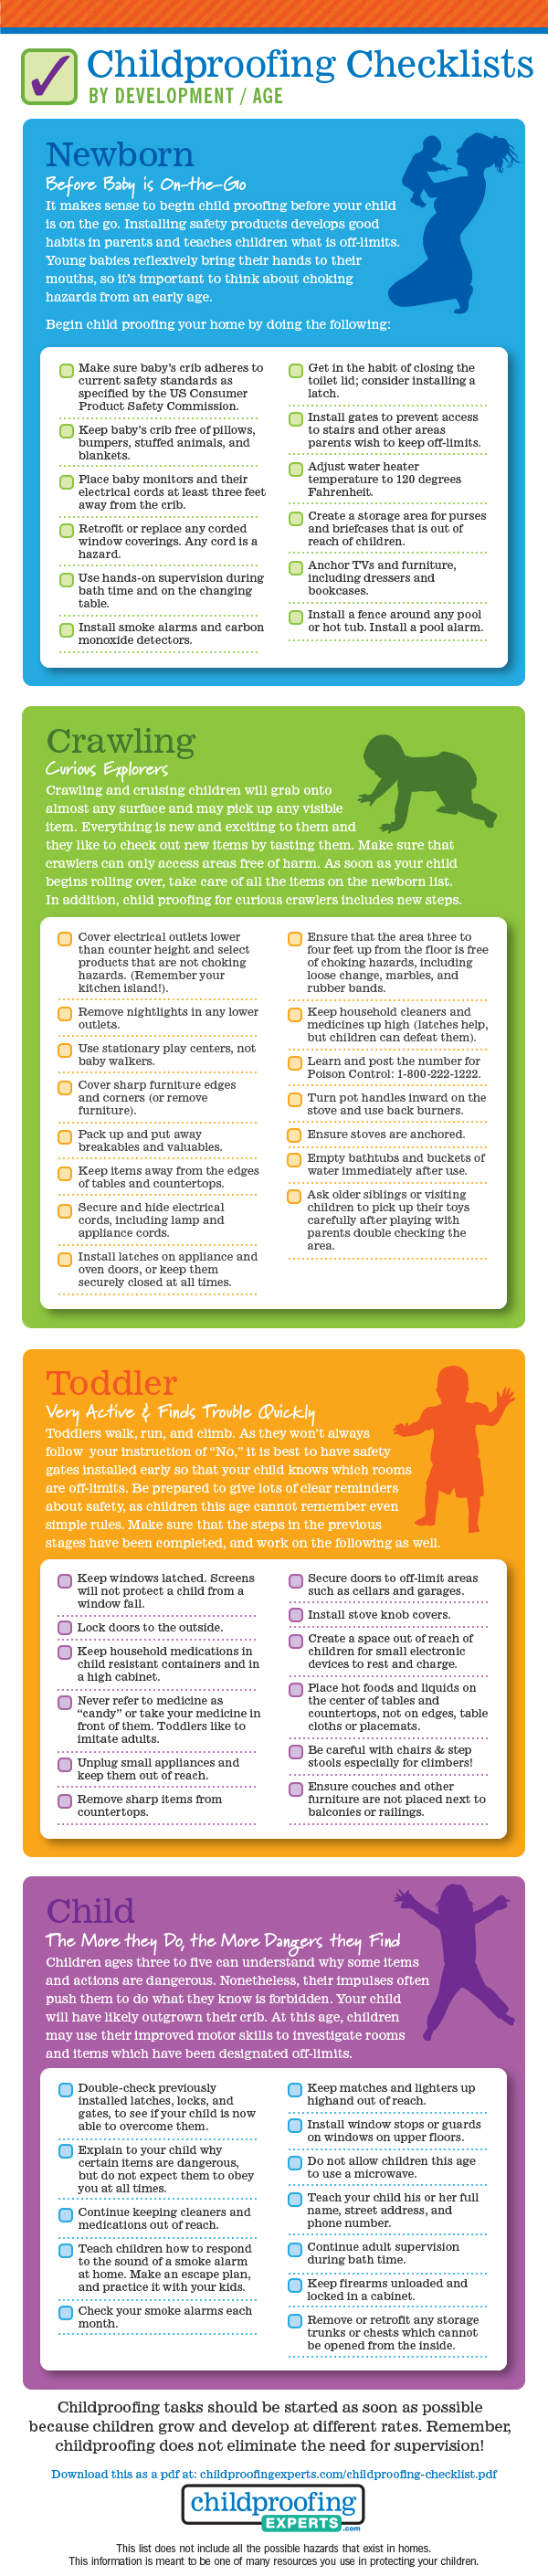 Child Proofing checklist by Age / Development